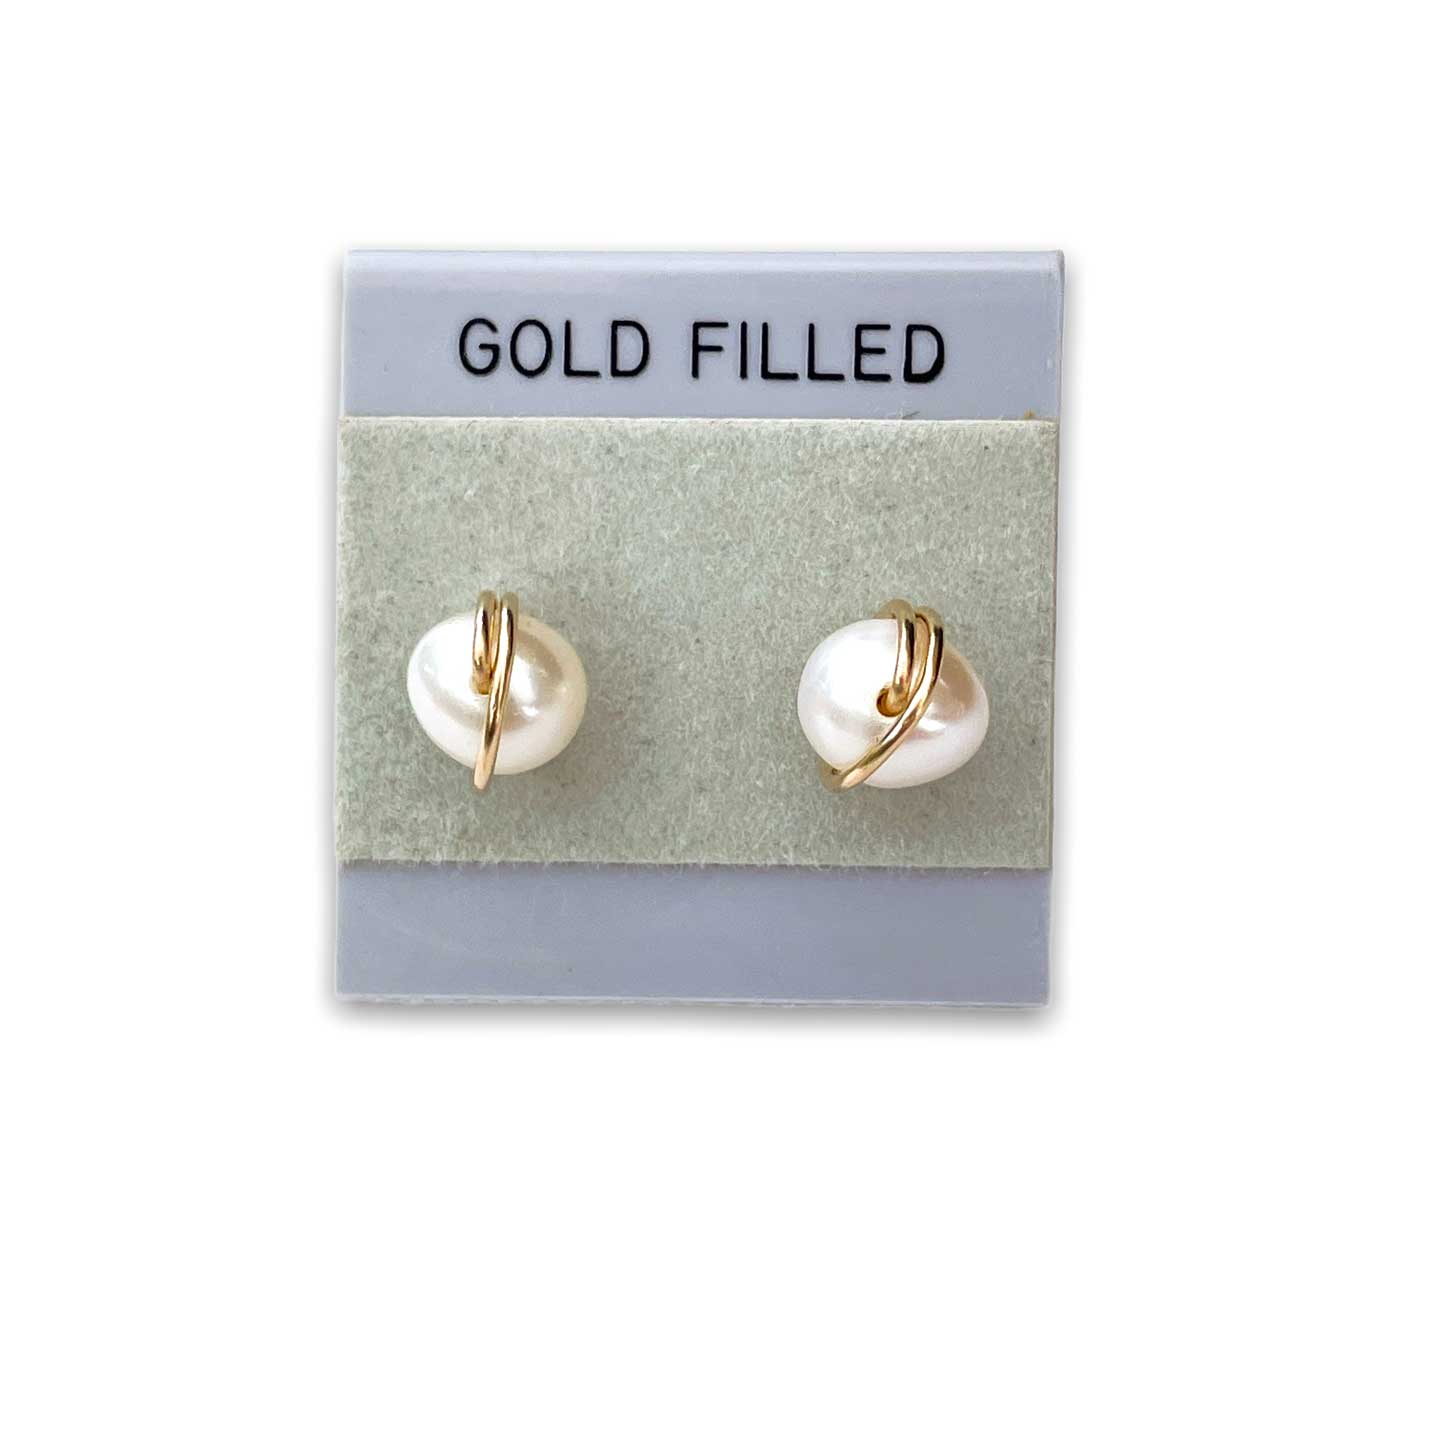 pearl stud earrings set in 14kt gold-filled 